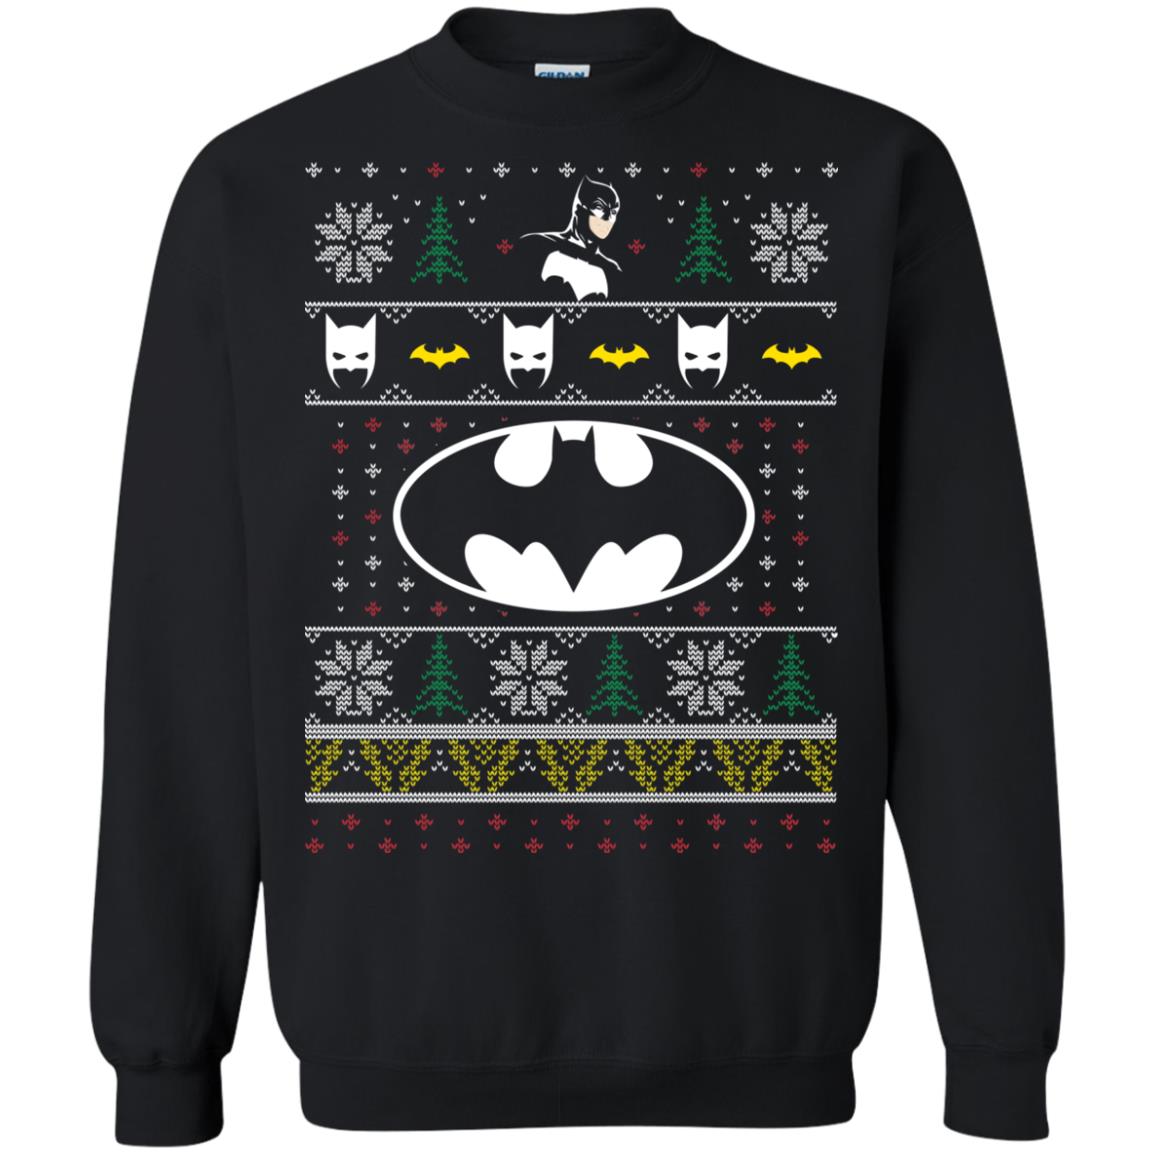 Black BATMAN Patterned Ugly Holiday Sweater Large